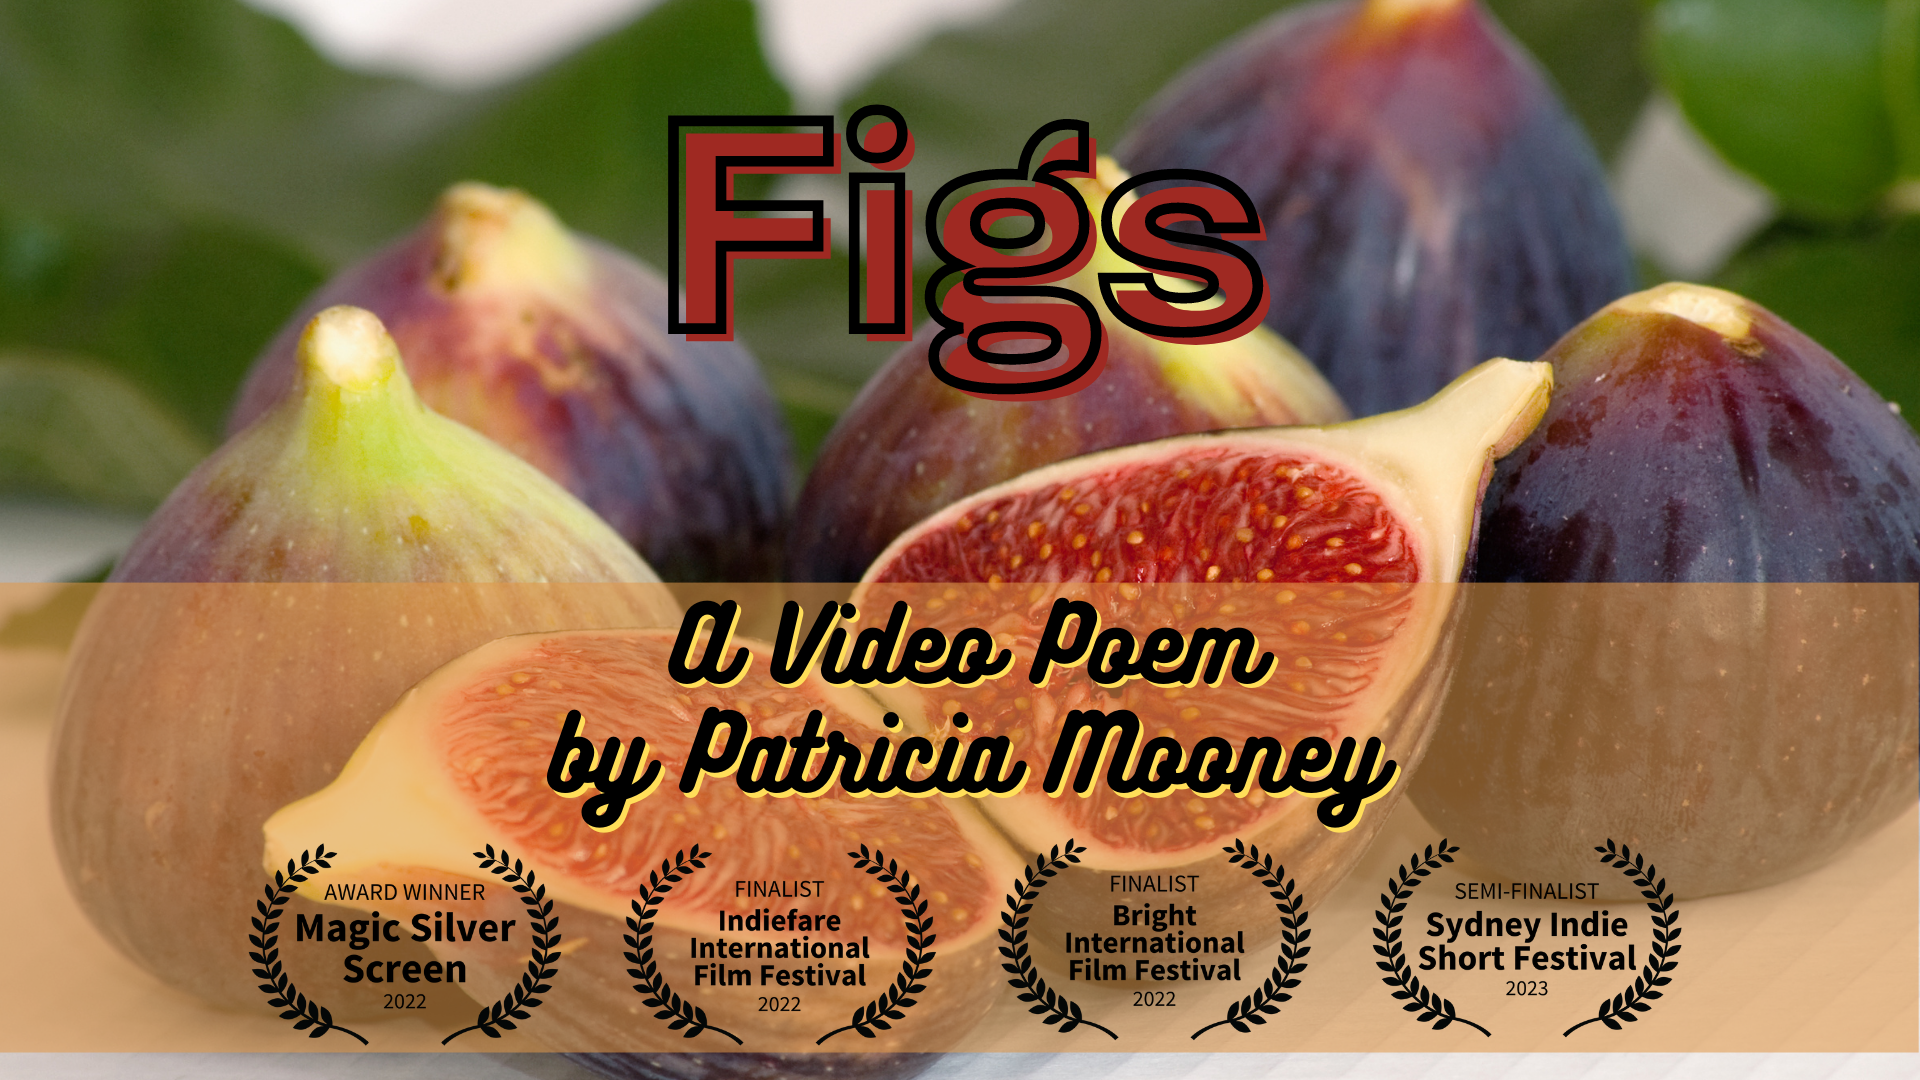 Figs a Multi Award Winning Video Poem by San Diego Filmmaker Patricia Mooney